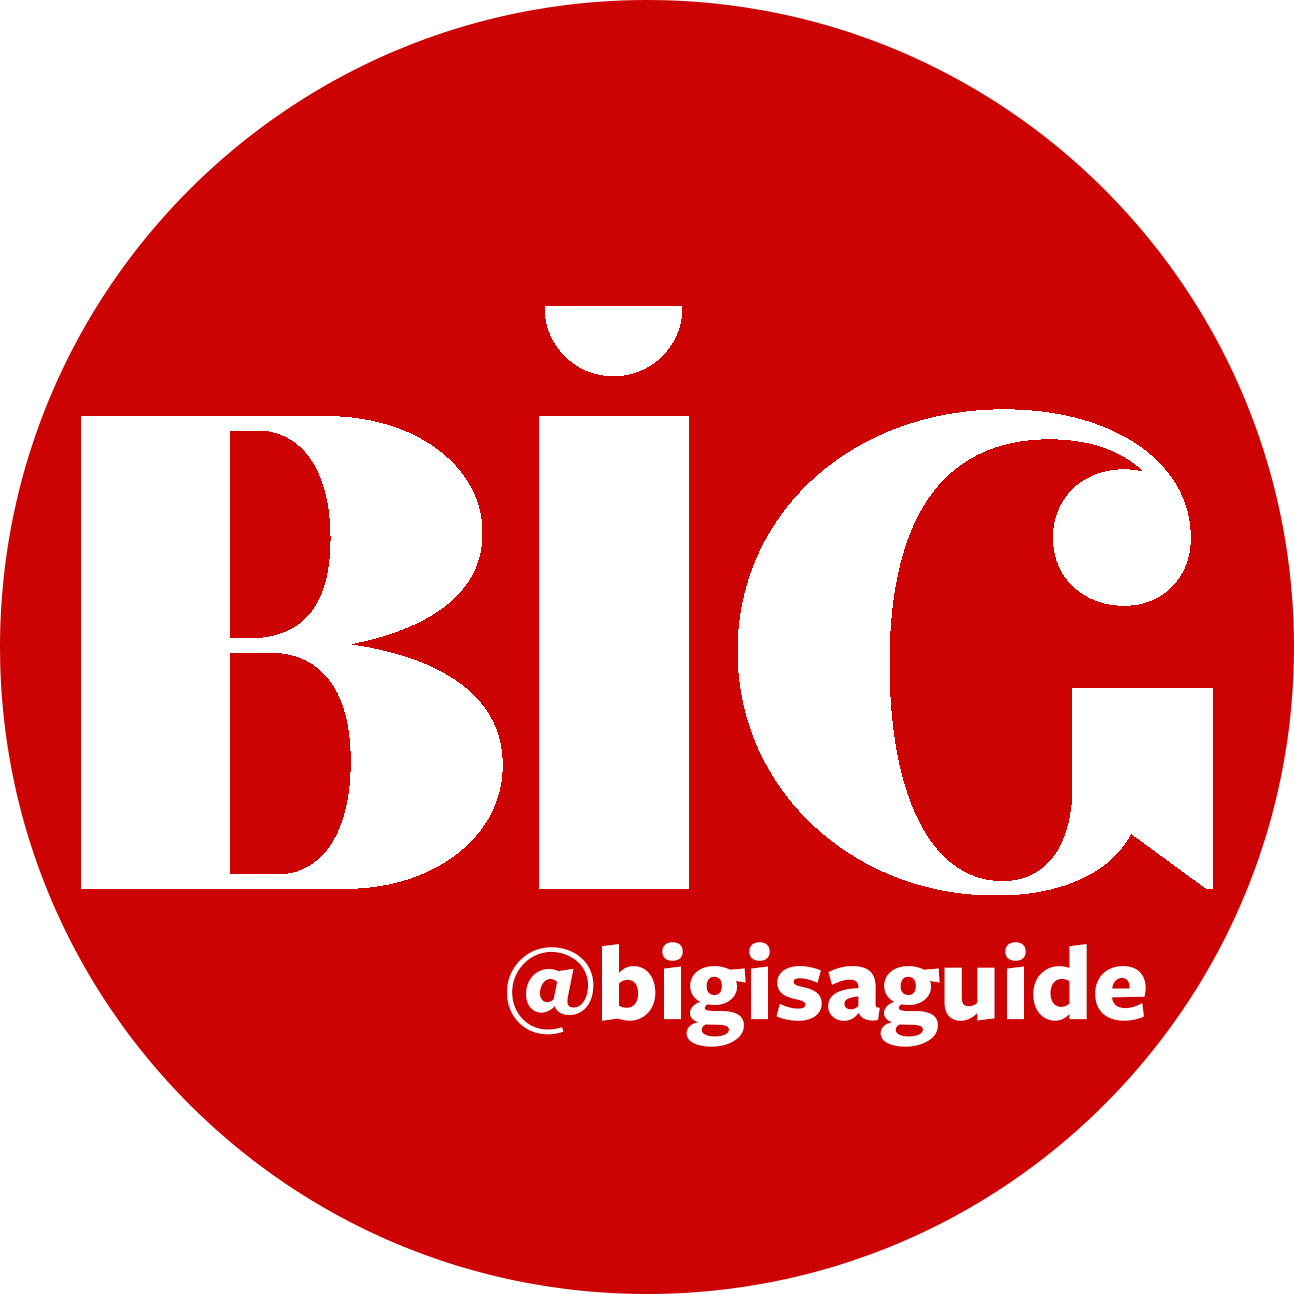 big logo